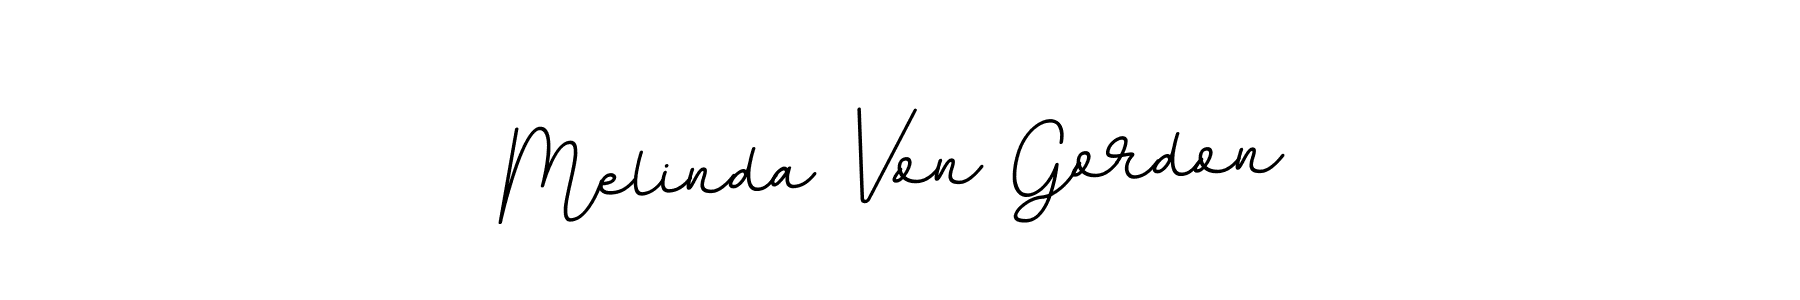 How to Draw Melinda Von Gordon signature style? BallpointsItalic-DORy9 is a latest design signature styles for name Melinda Von Gordon. Melinda Von Gordon signature style 11 images and pictures png